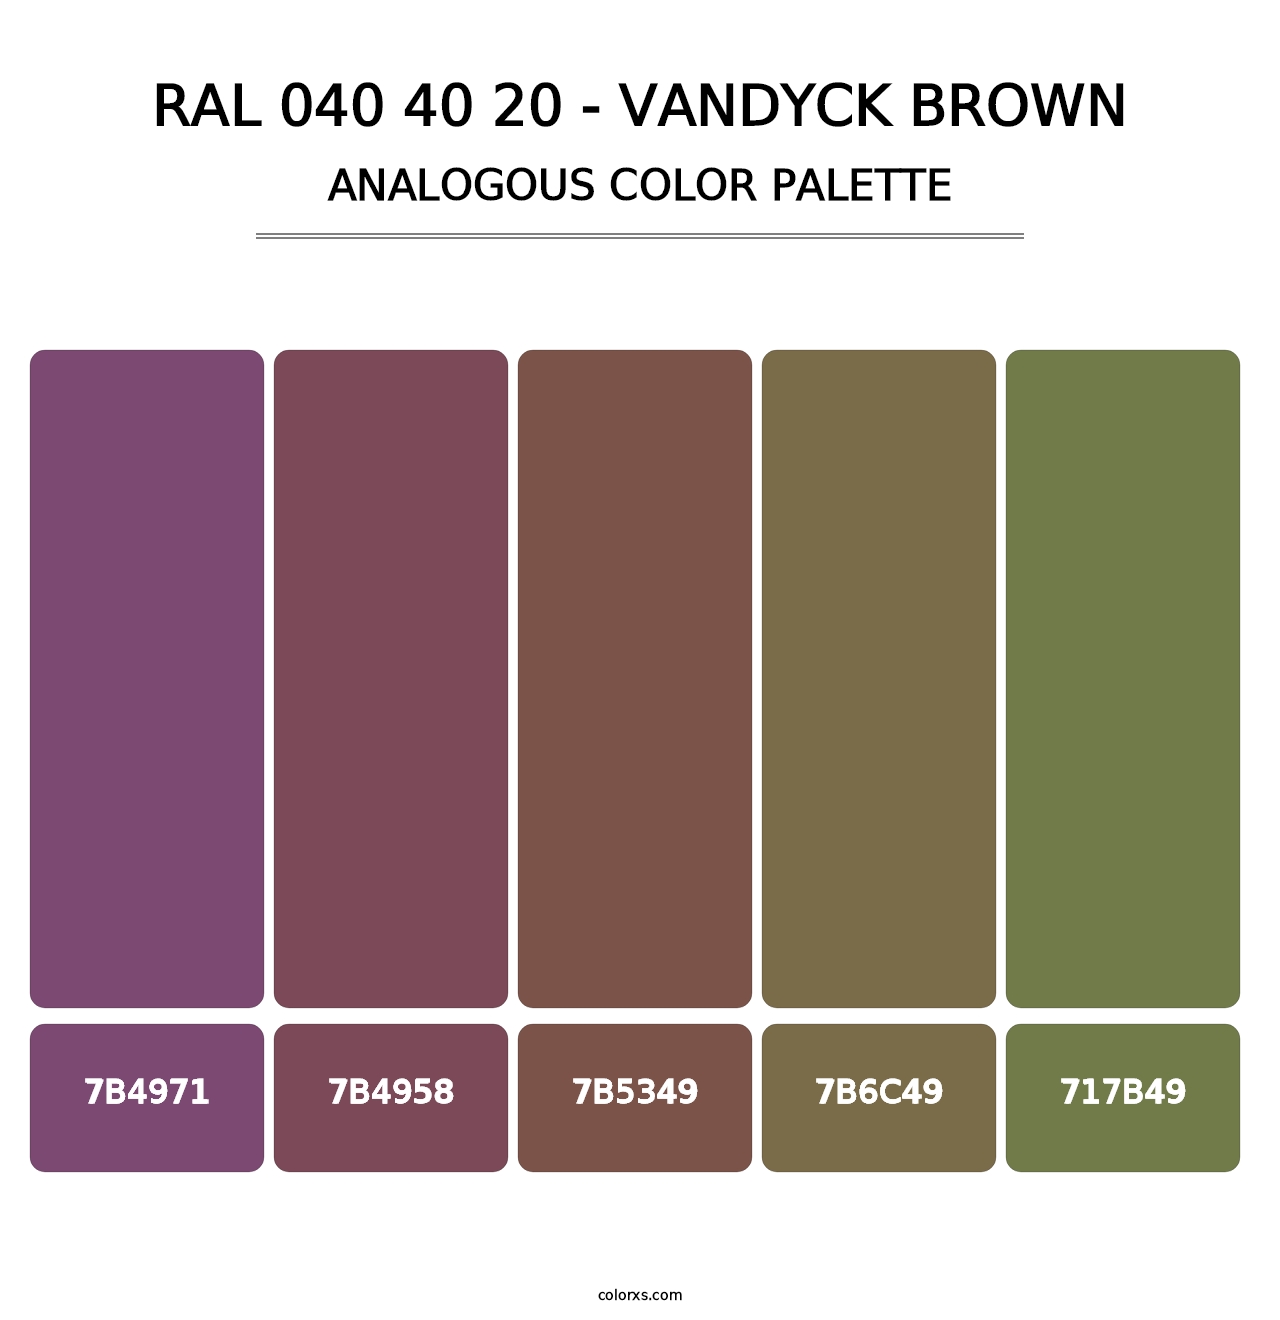 RAL 040 40 20 - Vandyck Brown - Analogous Color Palette